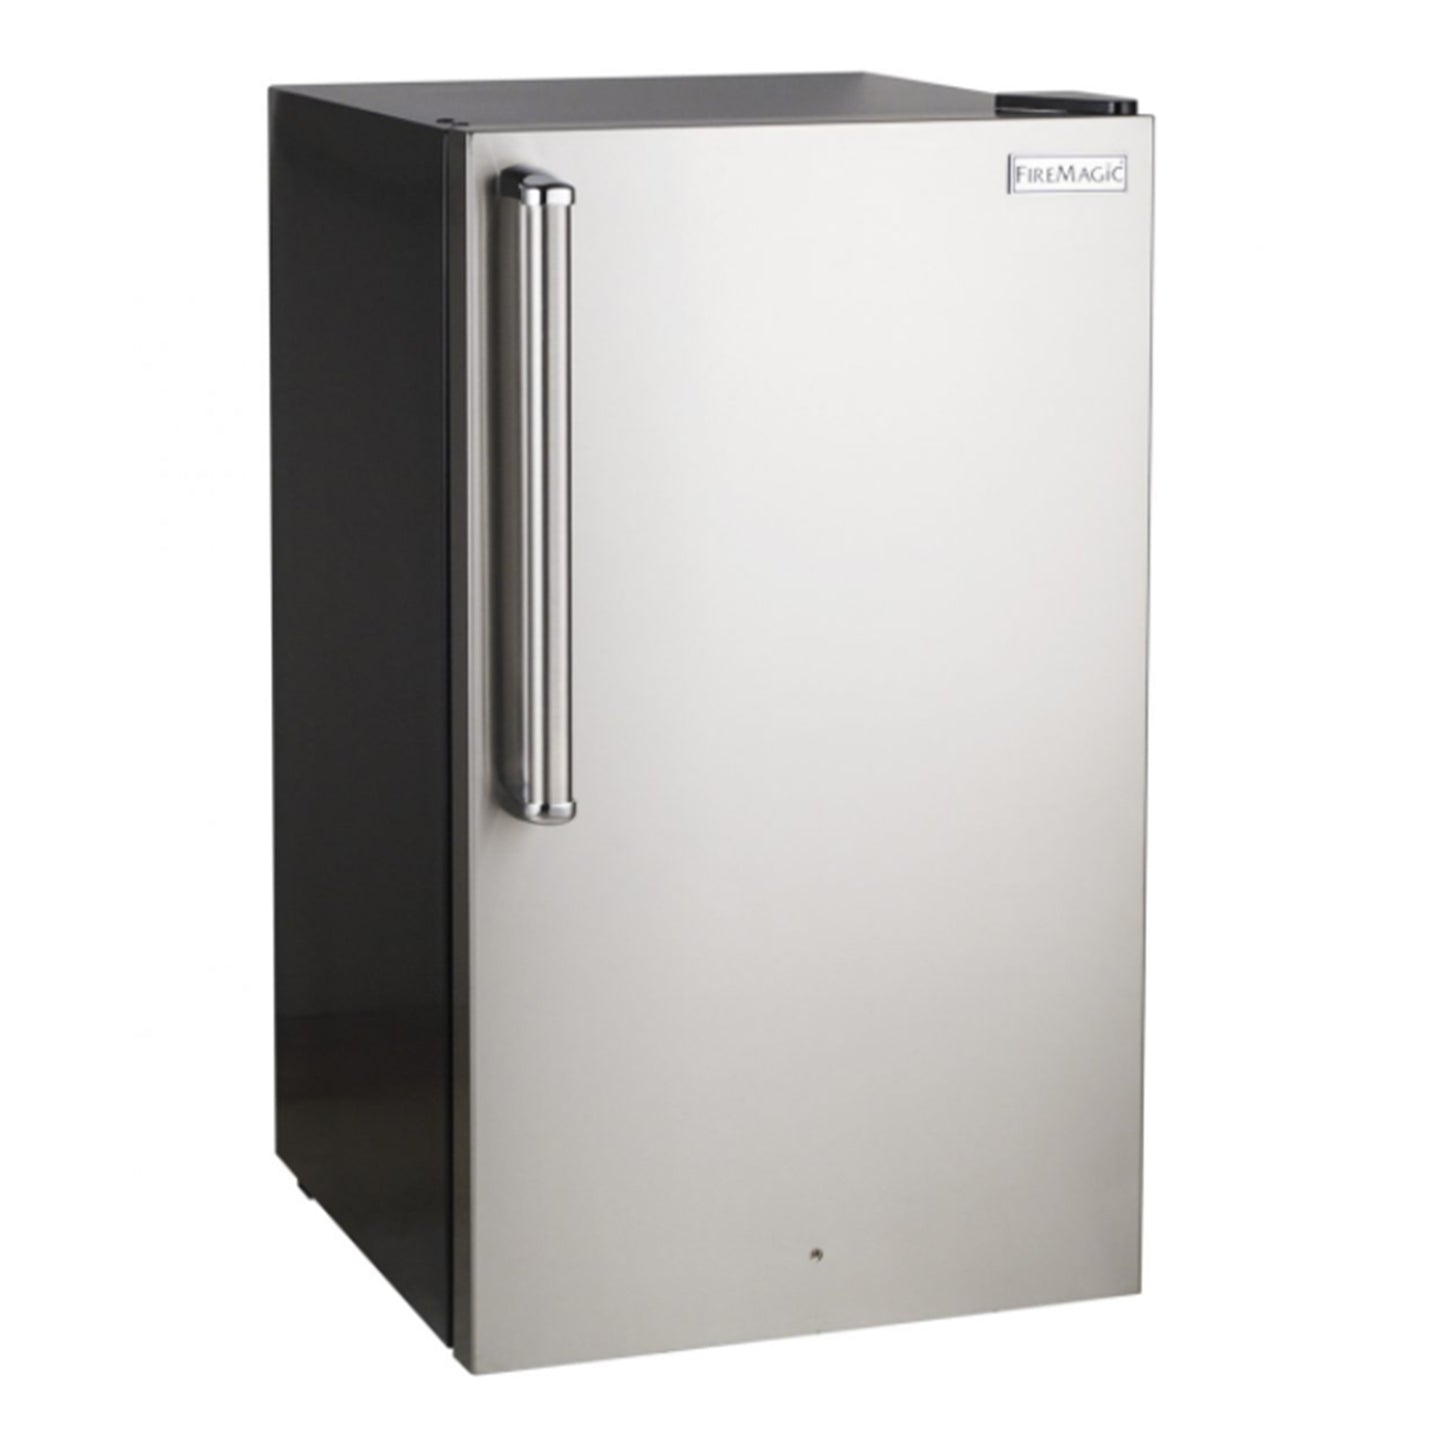 Fire Magic Refrigerator w/ Stainless Steel Premium Door